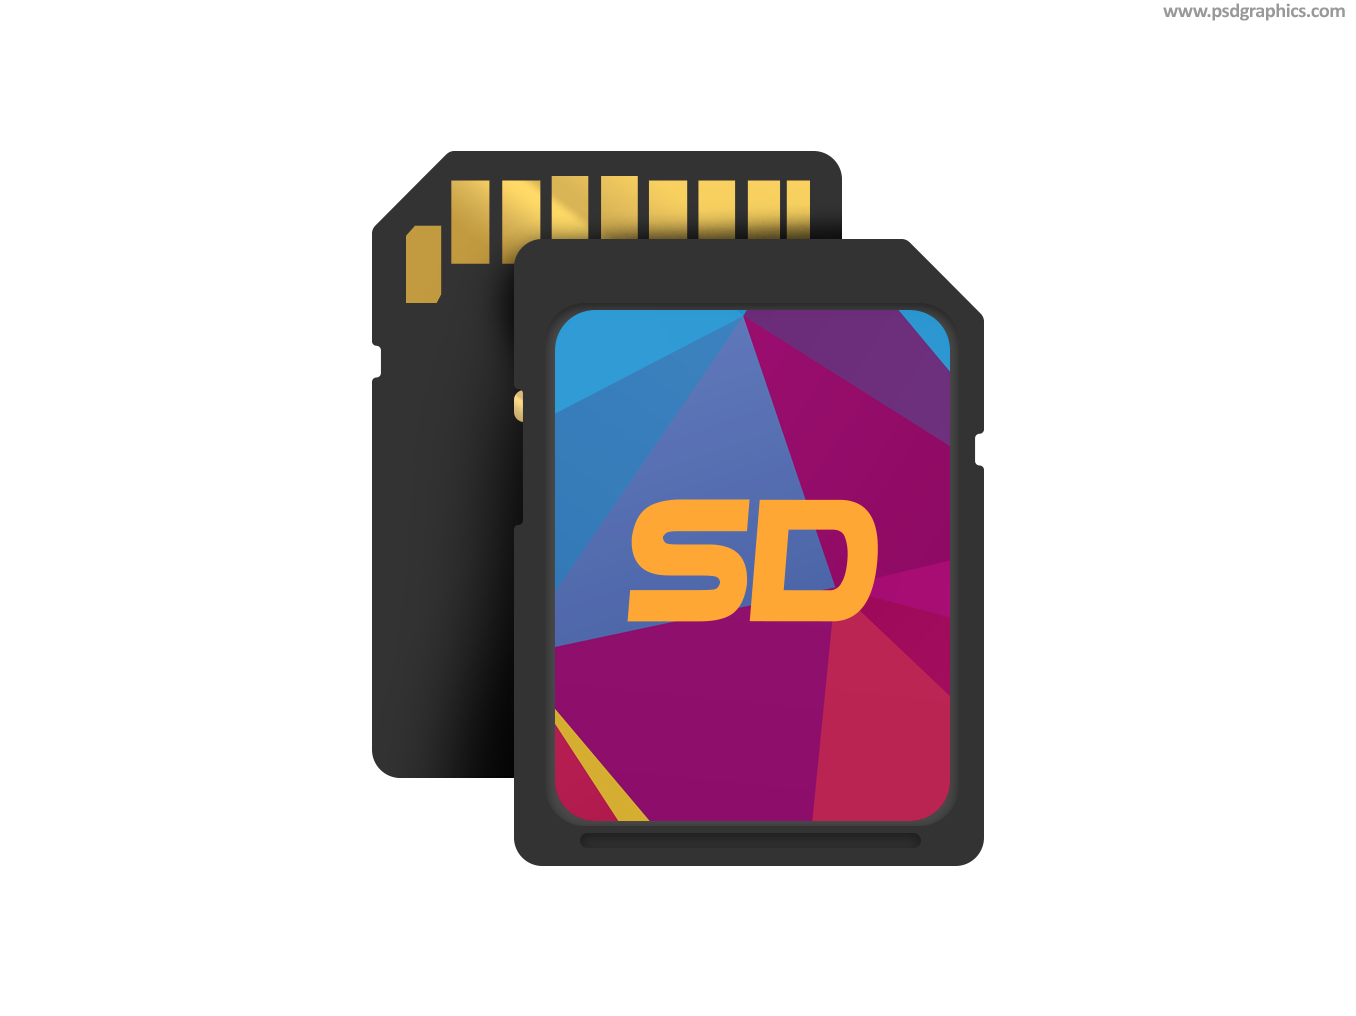 Sd Memory Card Icon Psd | Psdgraphics Regarding In Memory Cards Templates